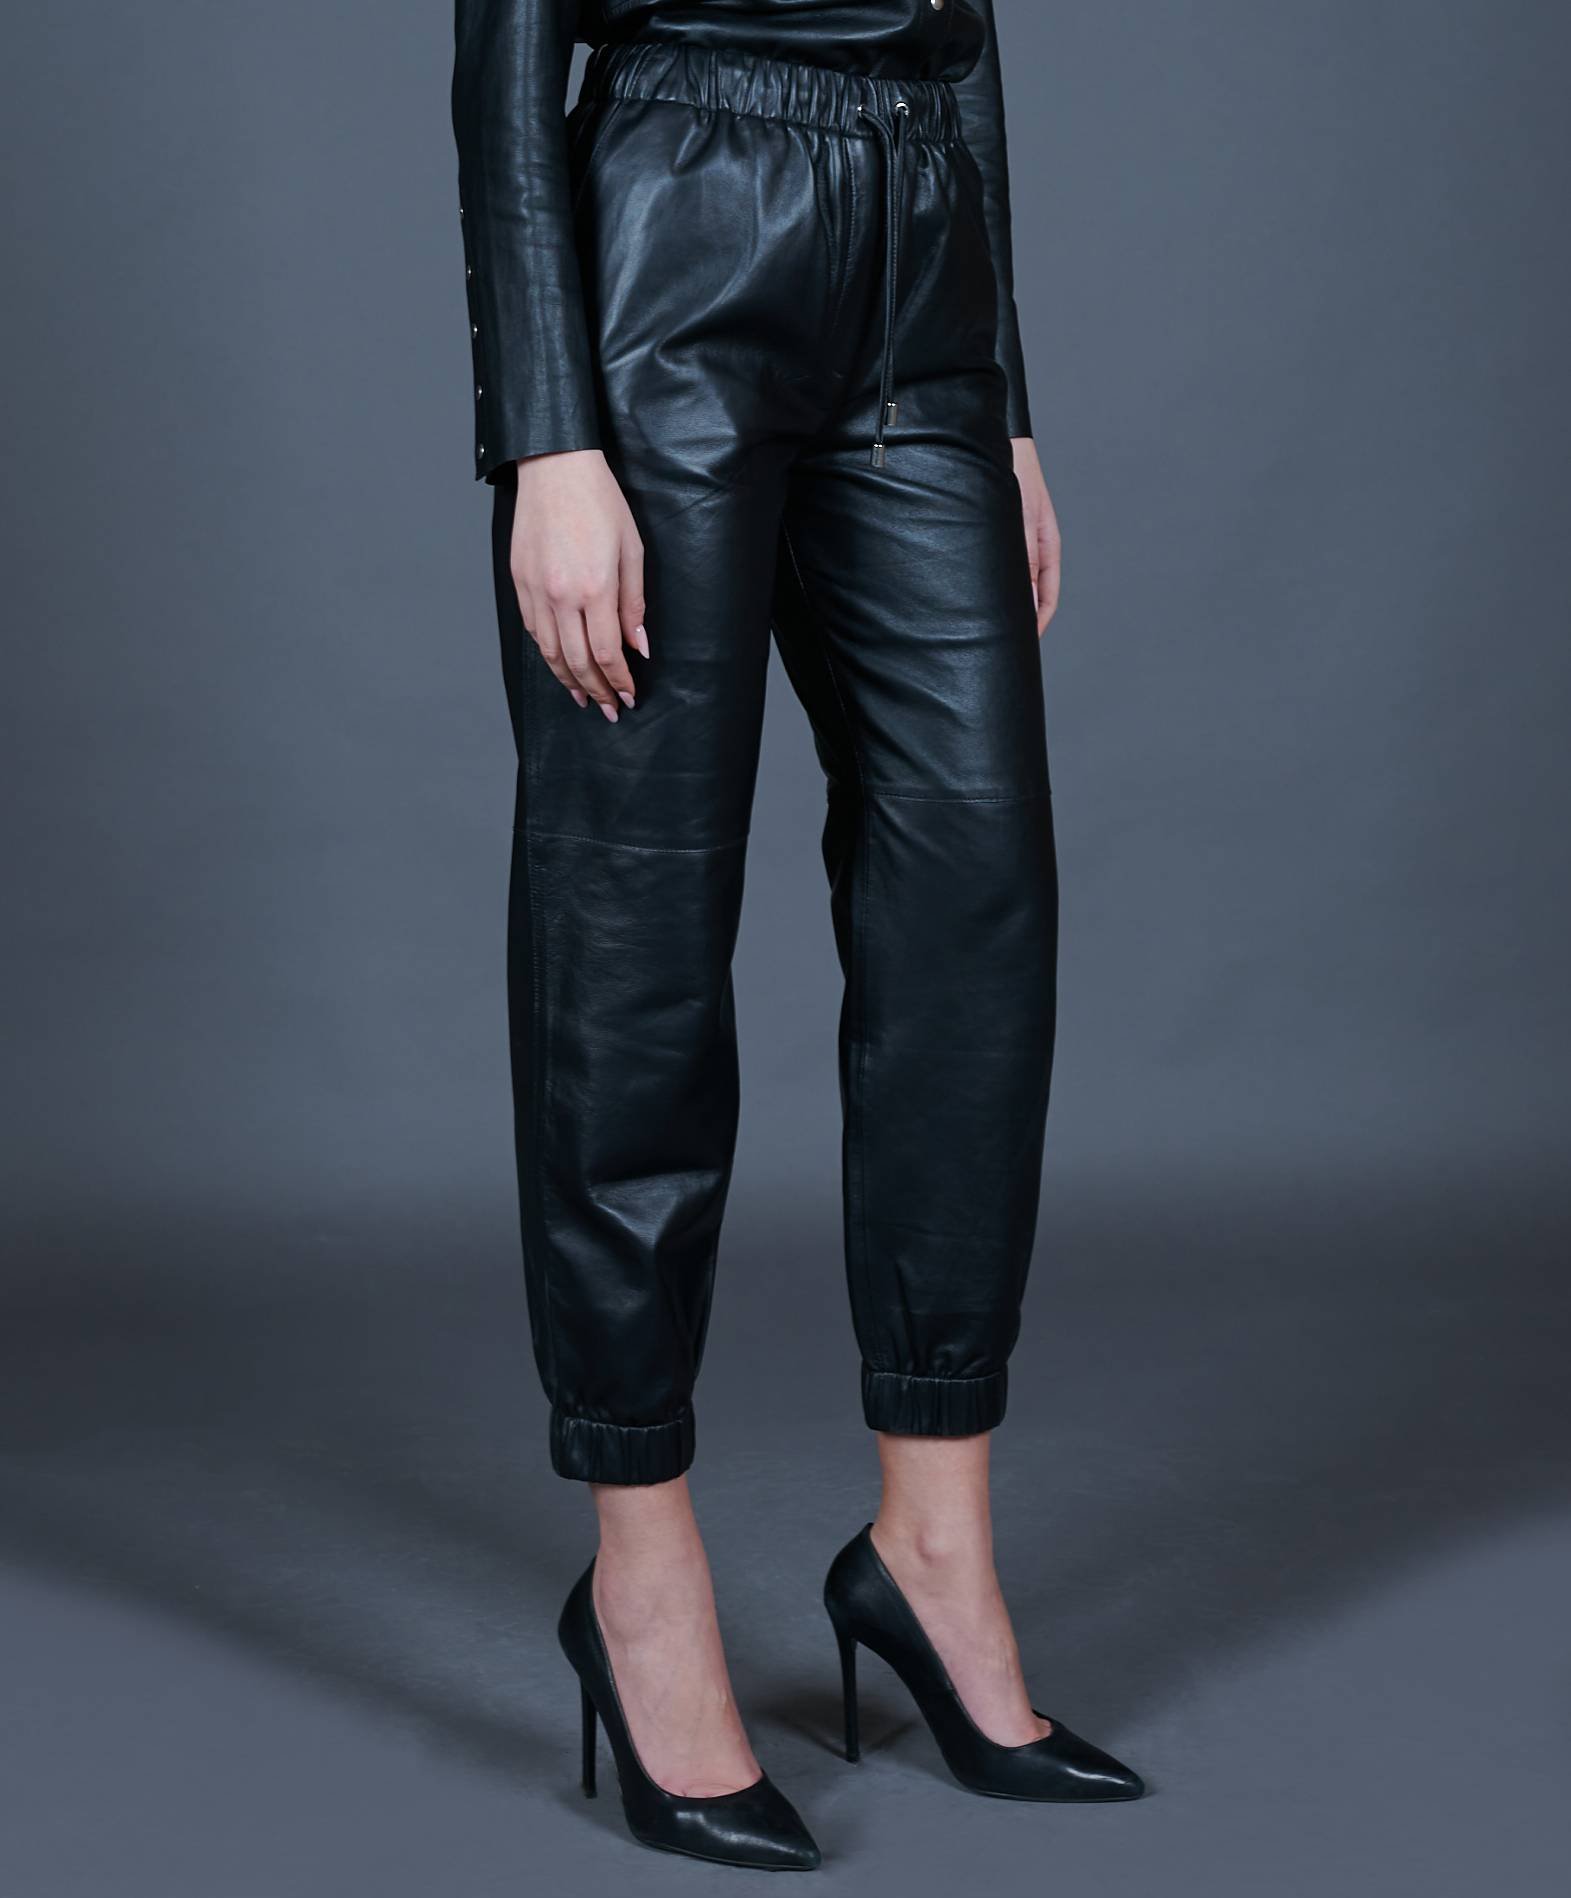 https://www.darienzo.us.com/store/97667-thickbox_default/women-s-leather-pants-genuine-leather-black-Sanda.jpg